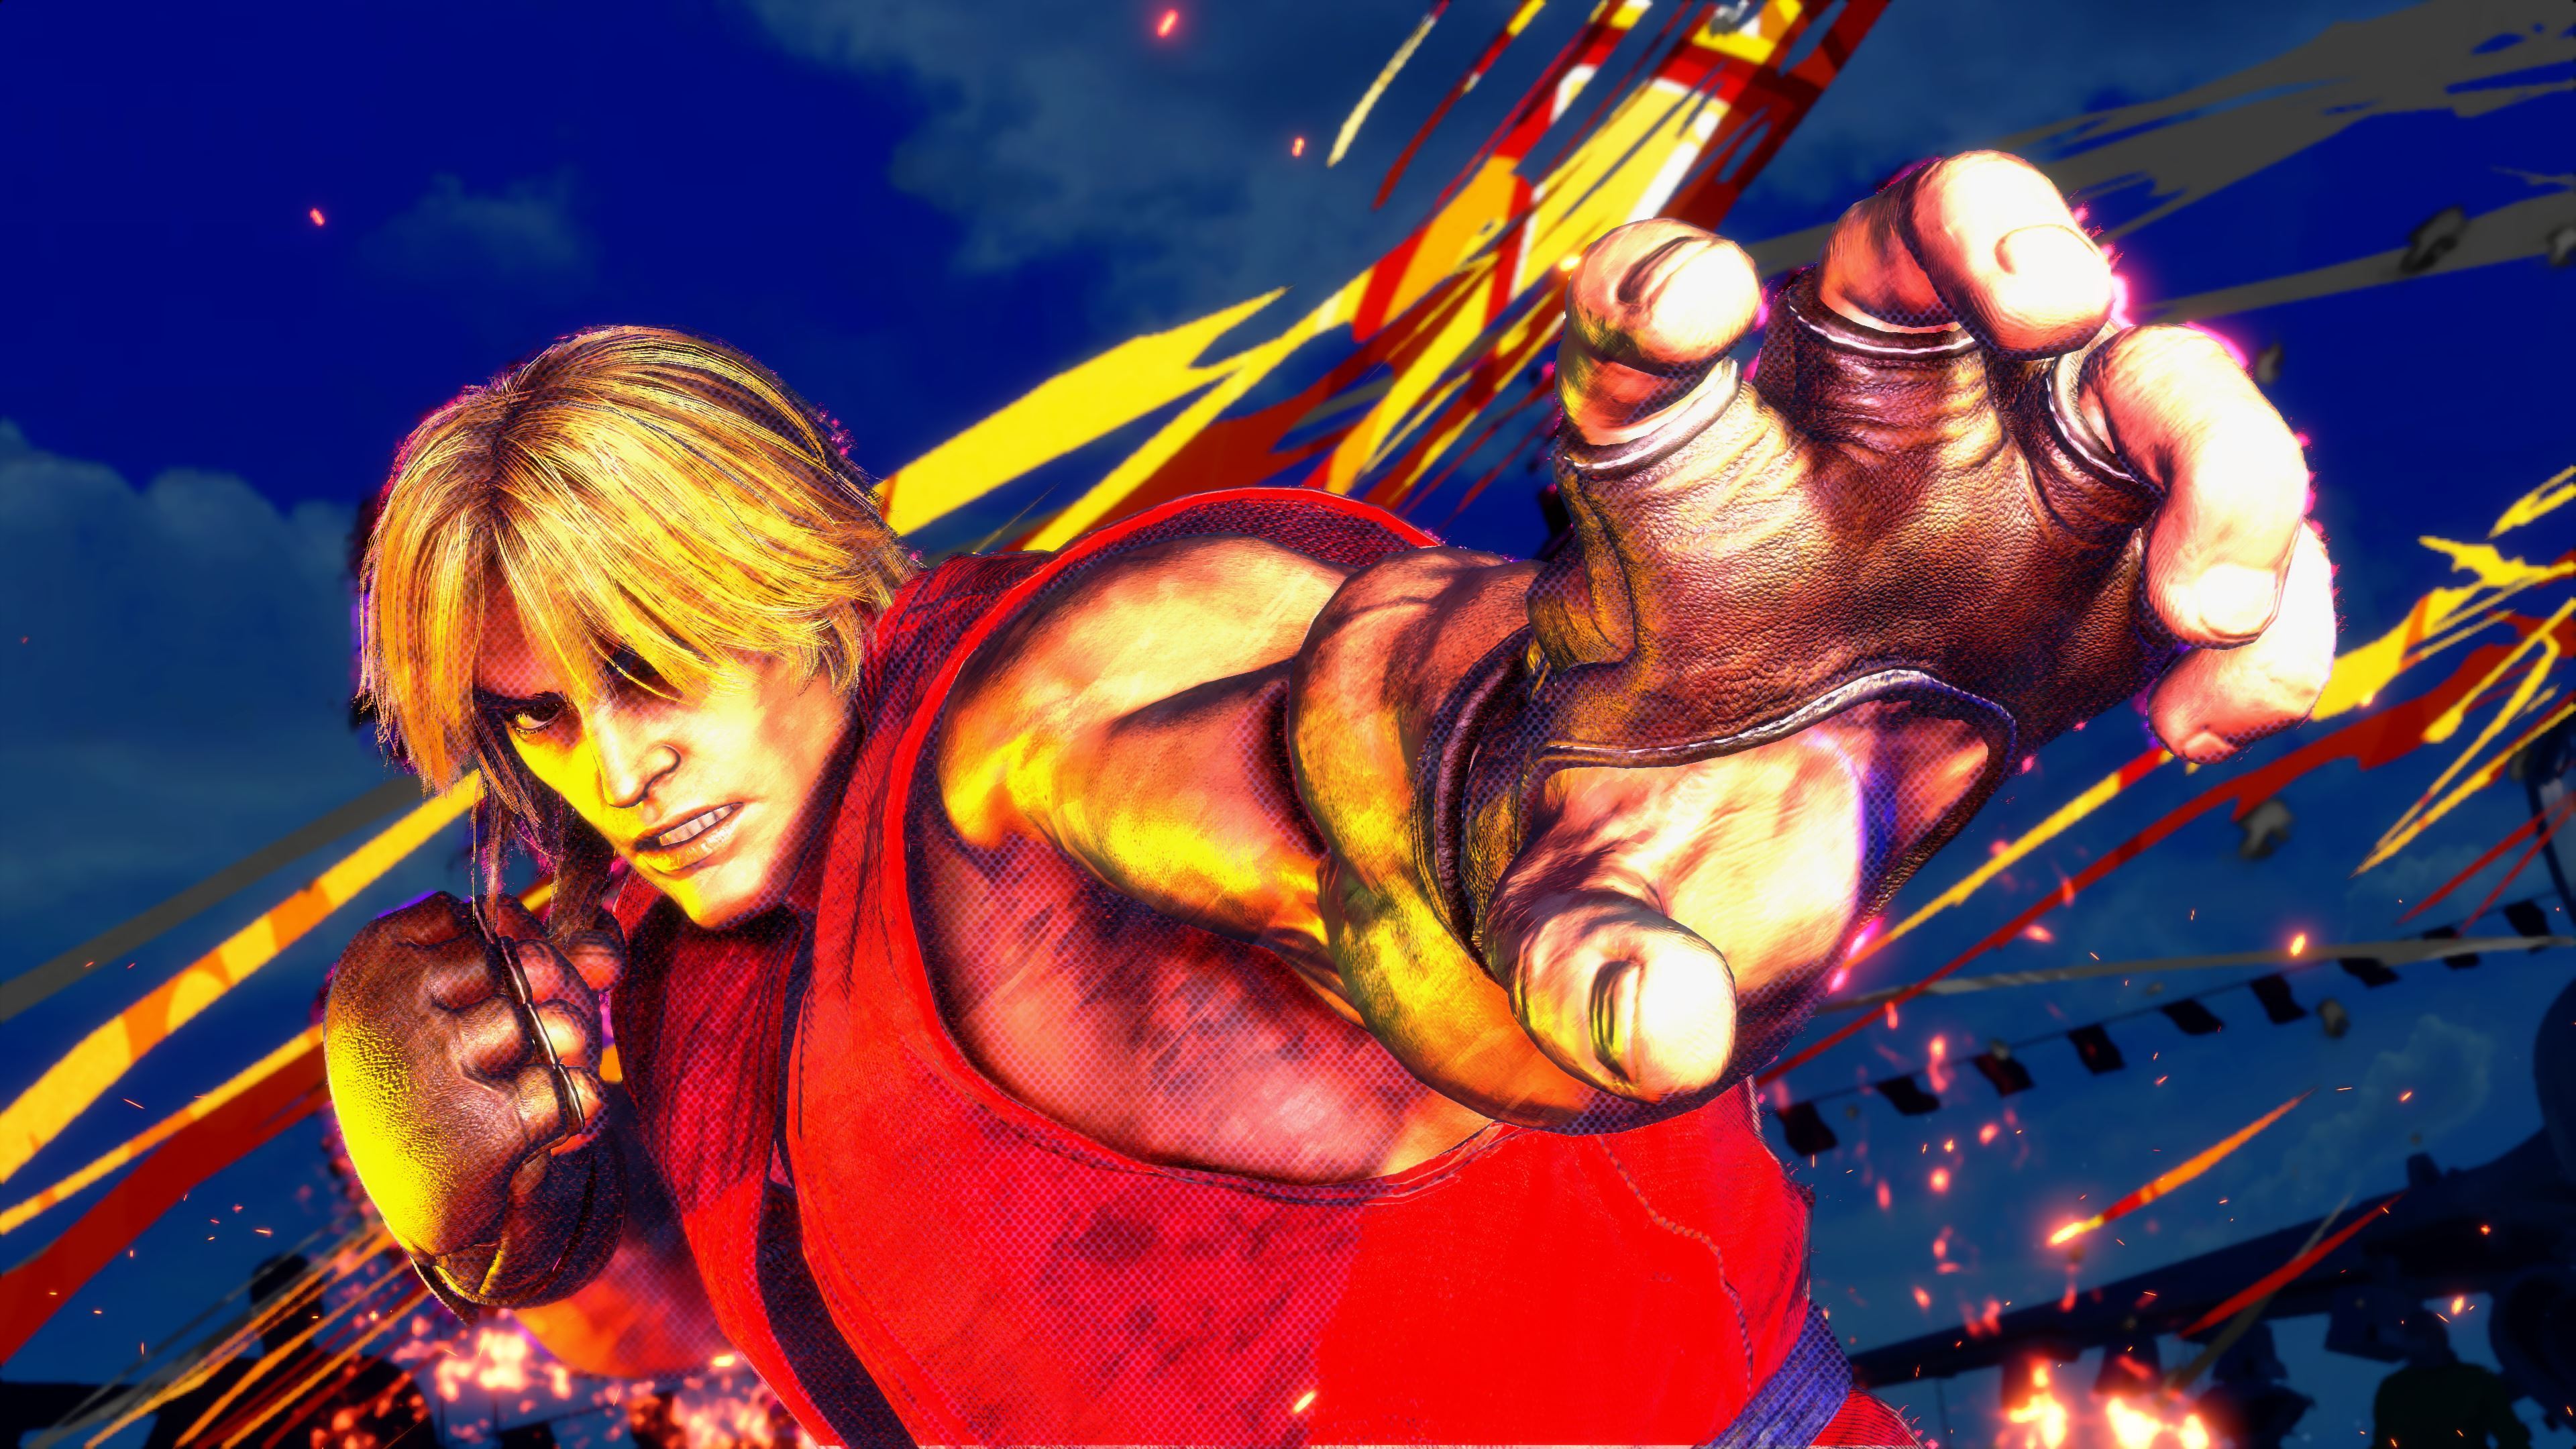 Blanka joins Street Fighter V on Feb. 20 - Dot Esports